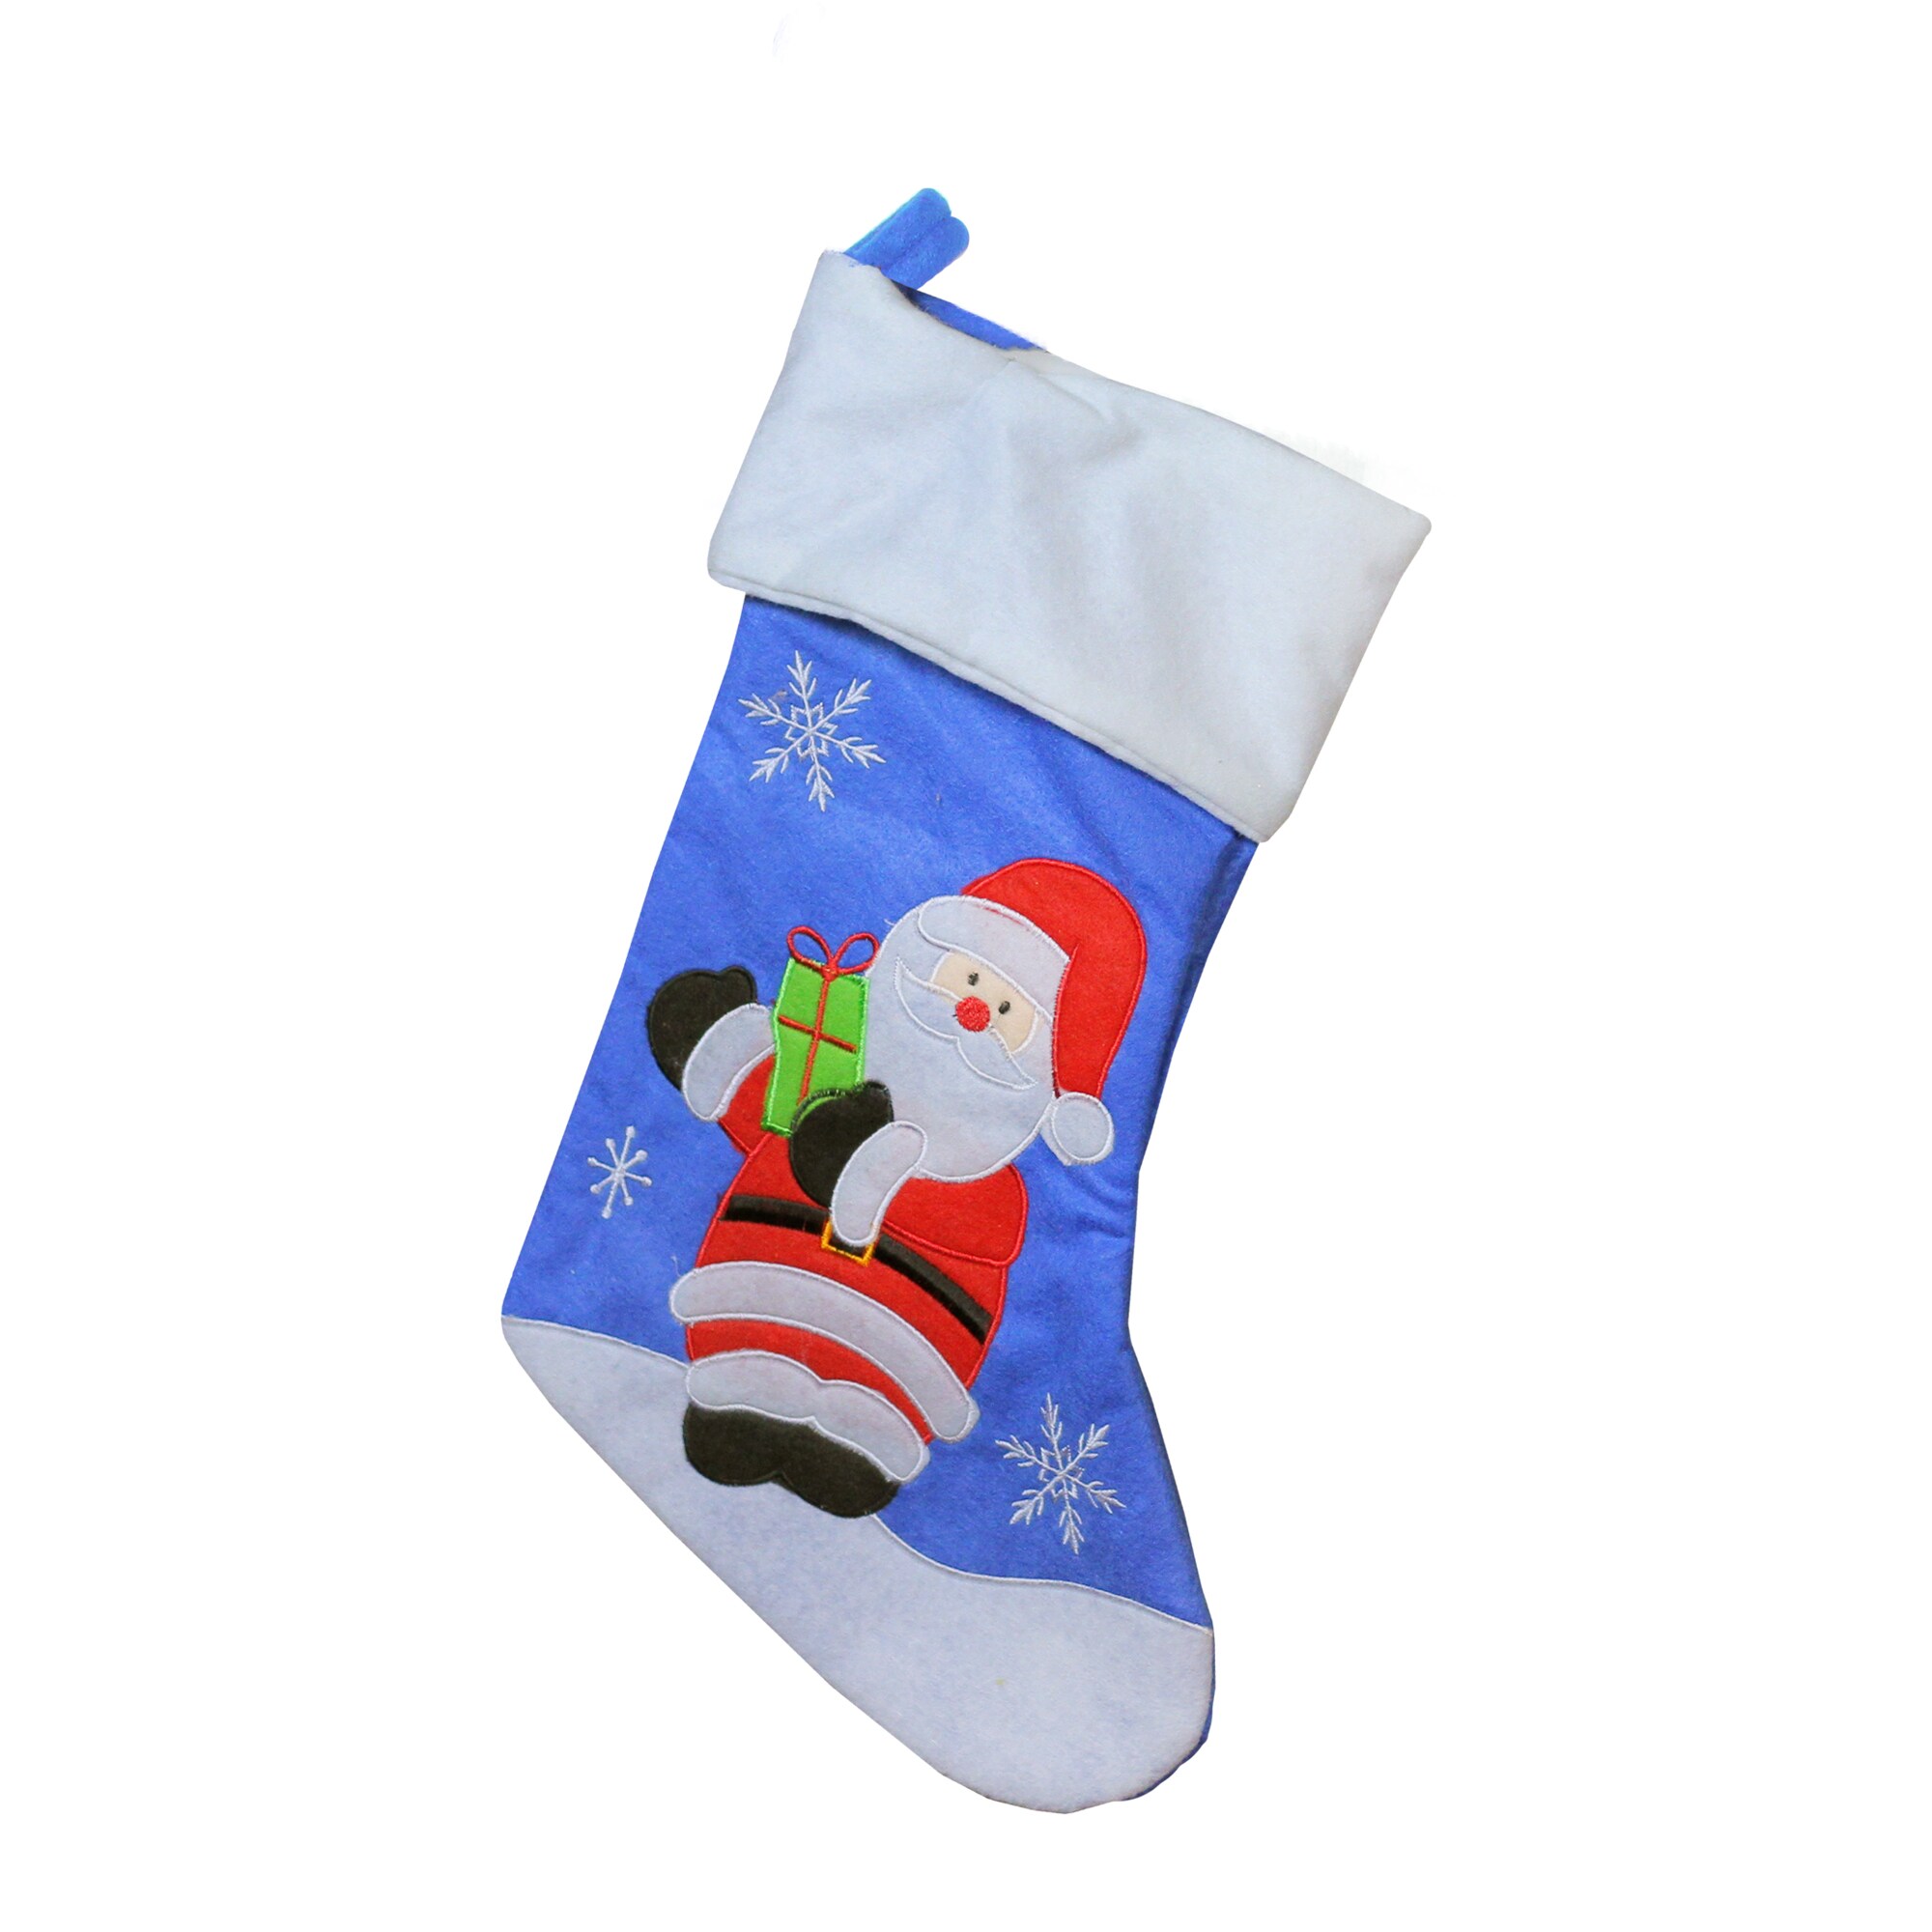 Blue Christmas Stockings at Lowes.com